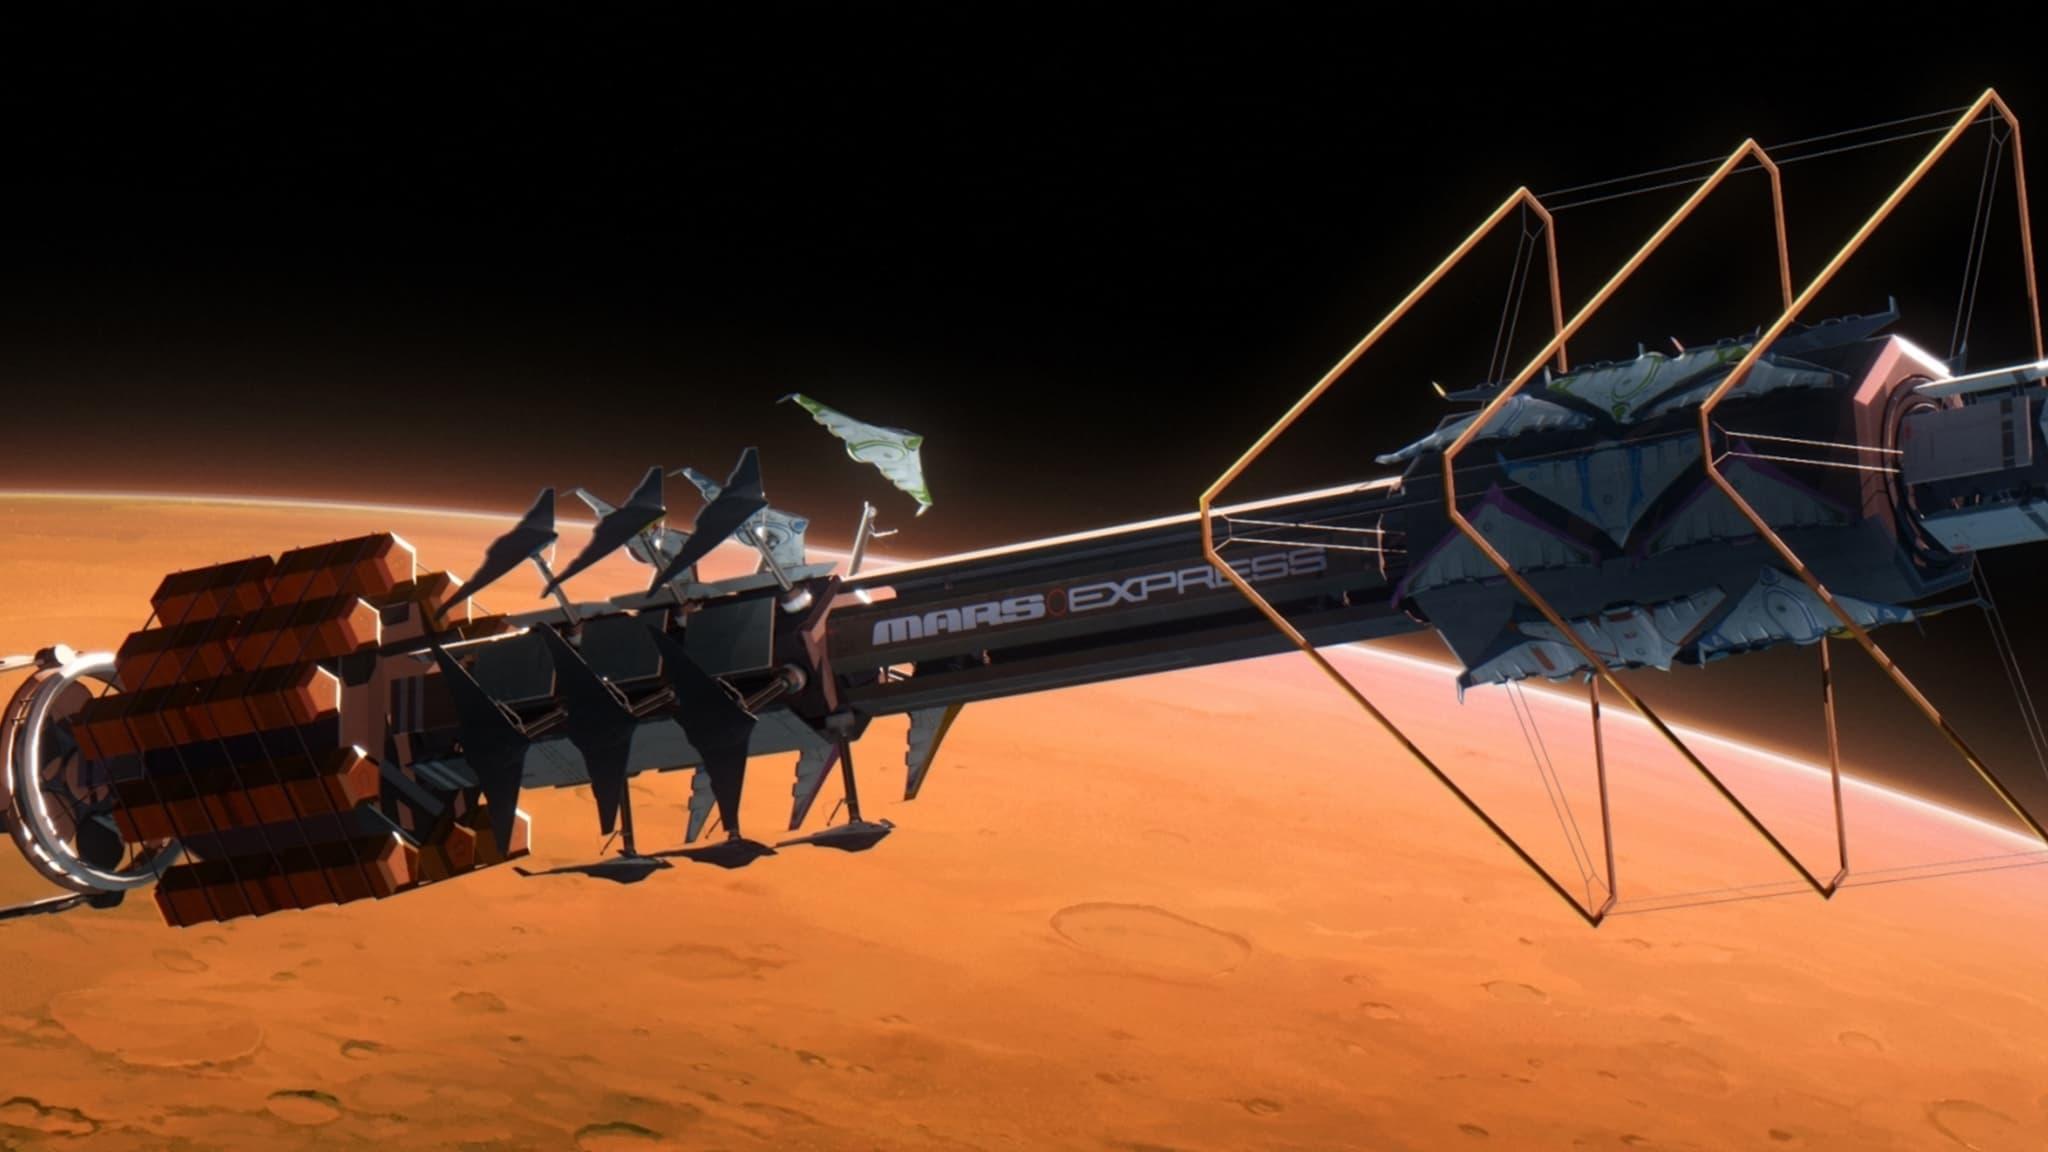 Mars Express backdrop